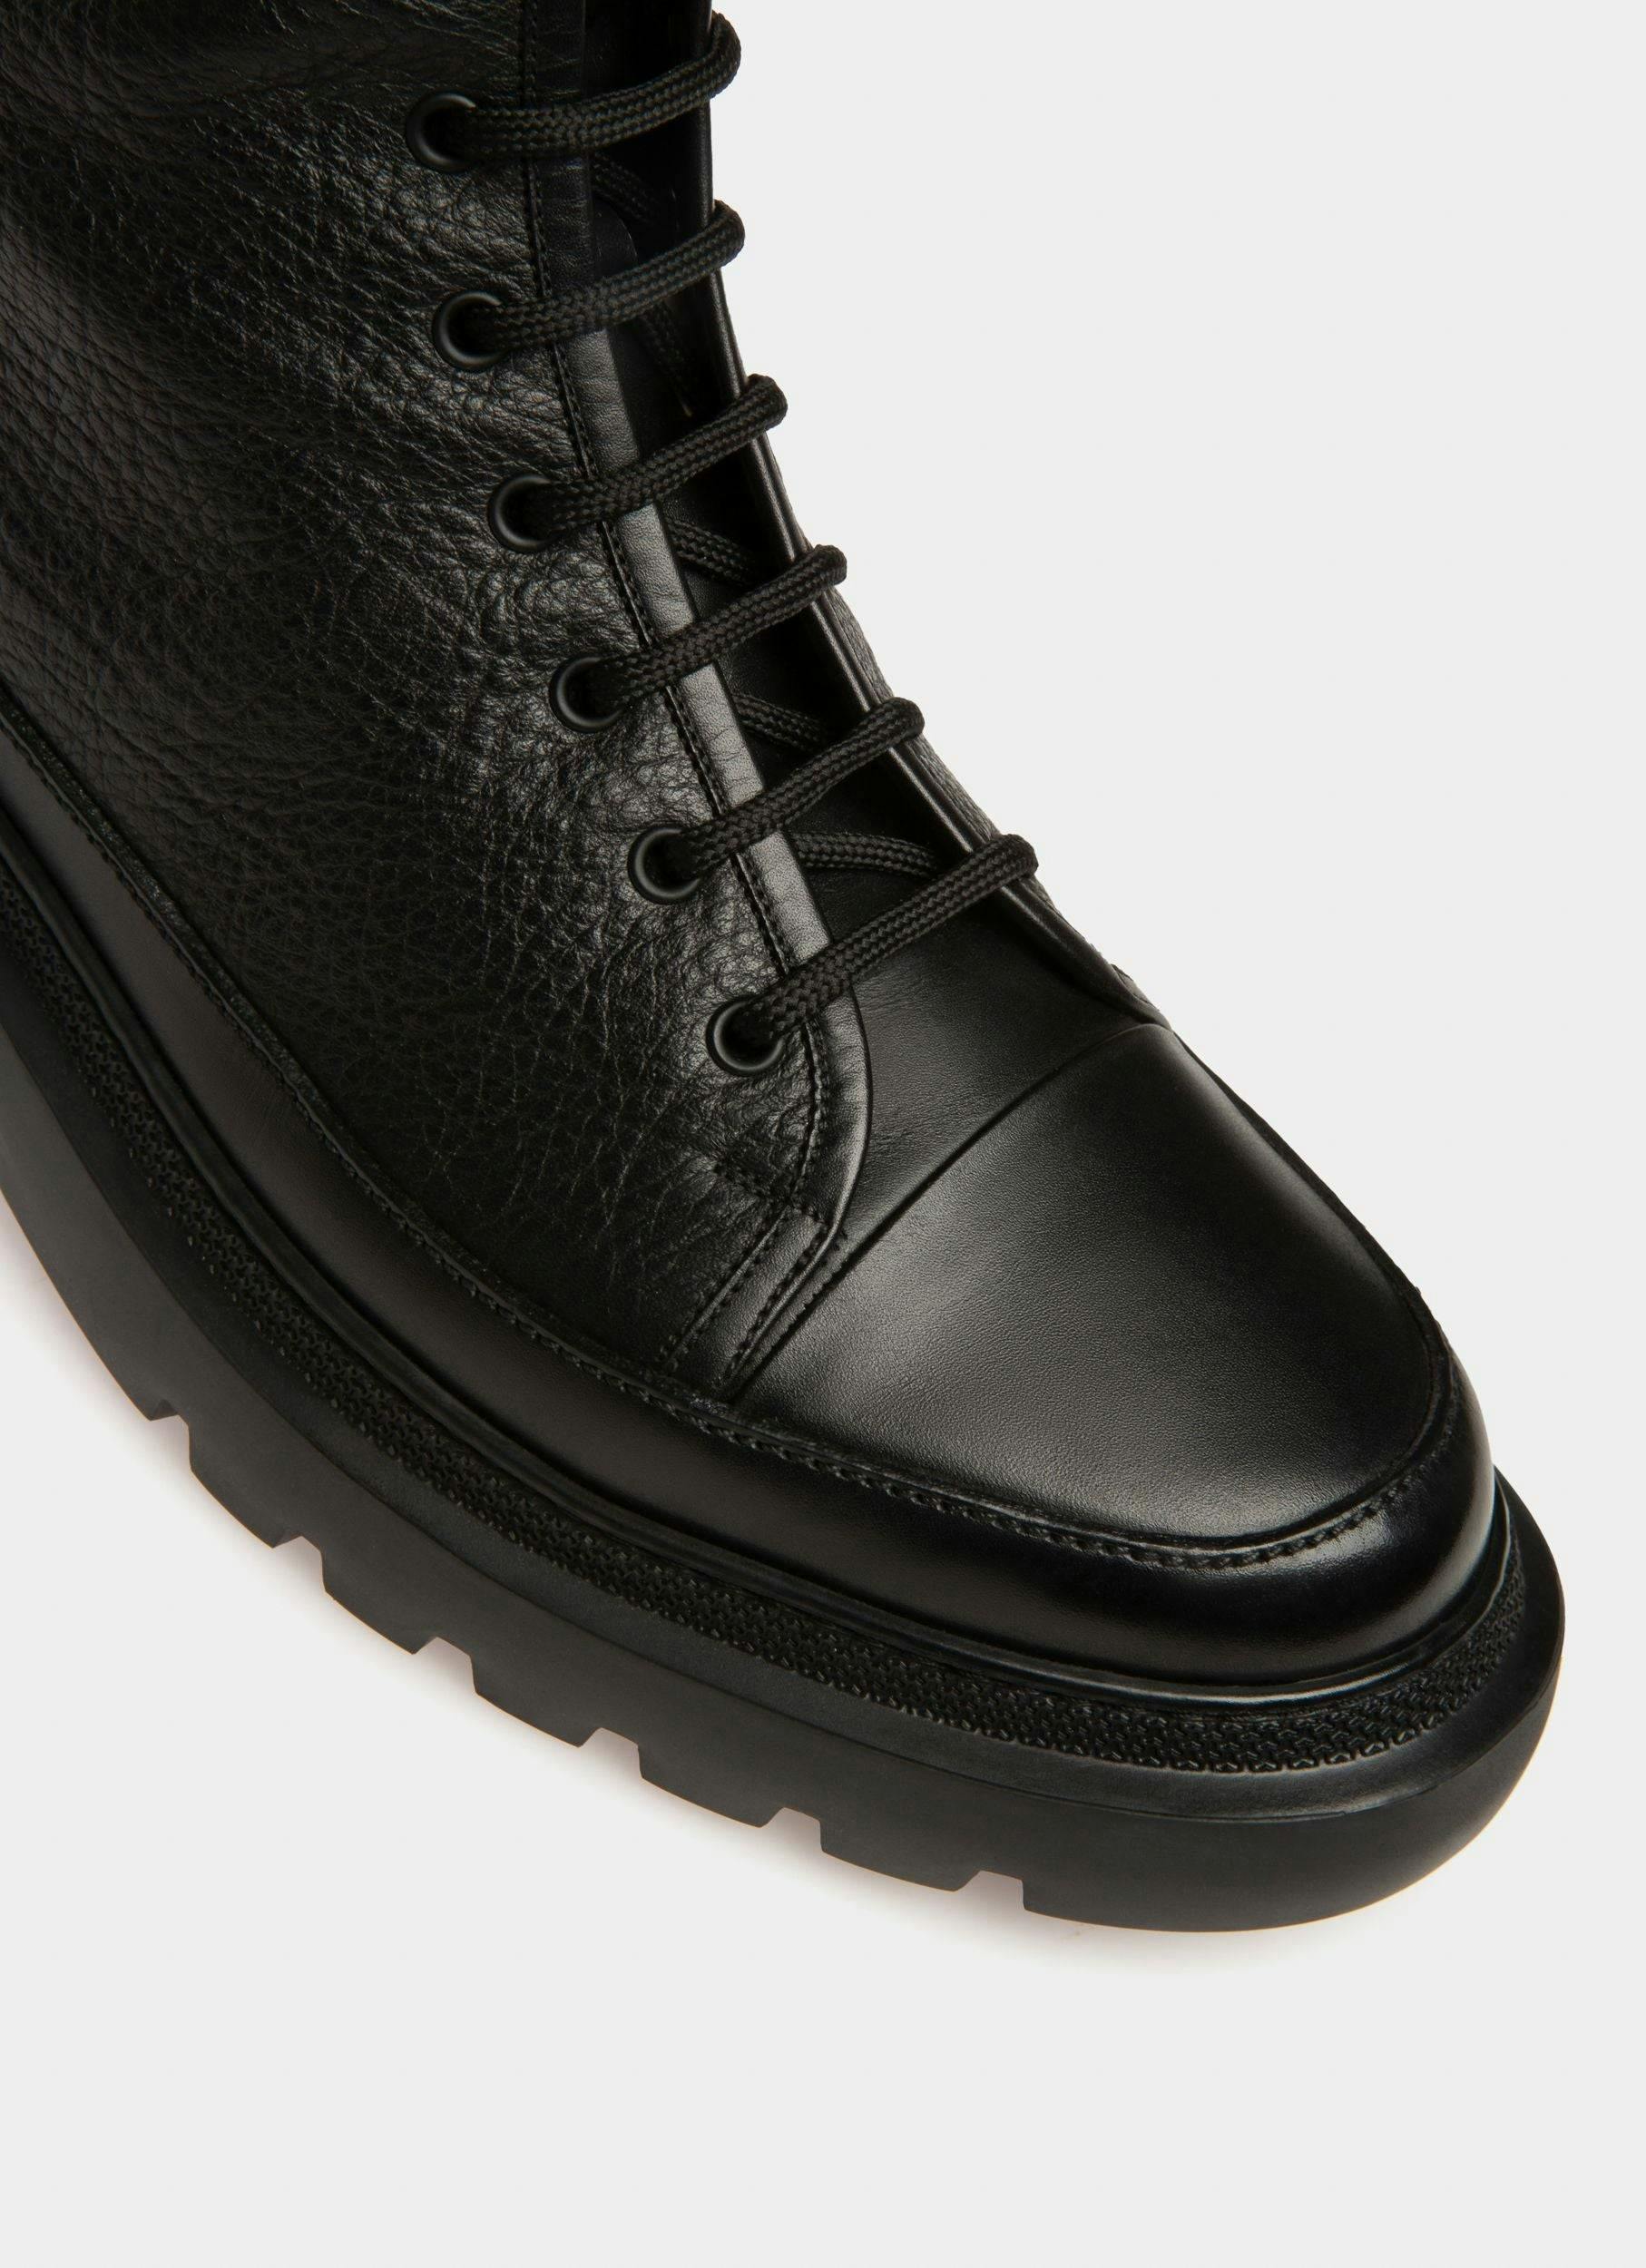 Vatiz Leather Boots In Black - Men's - Bally - 06